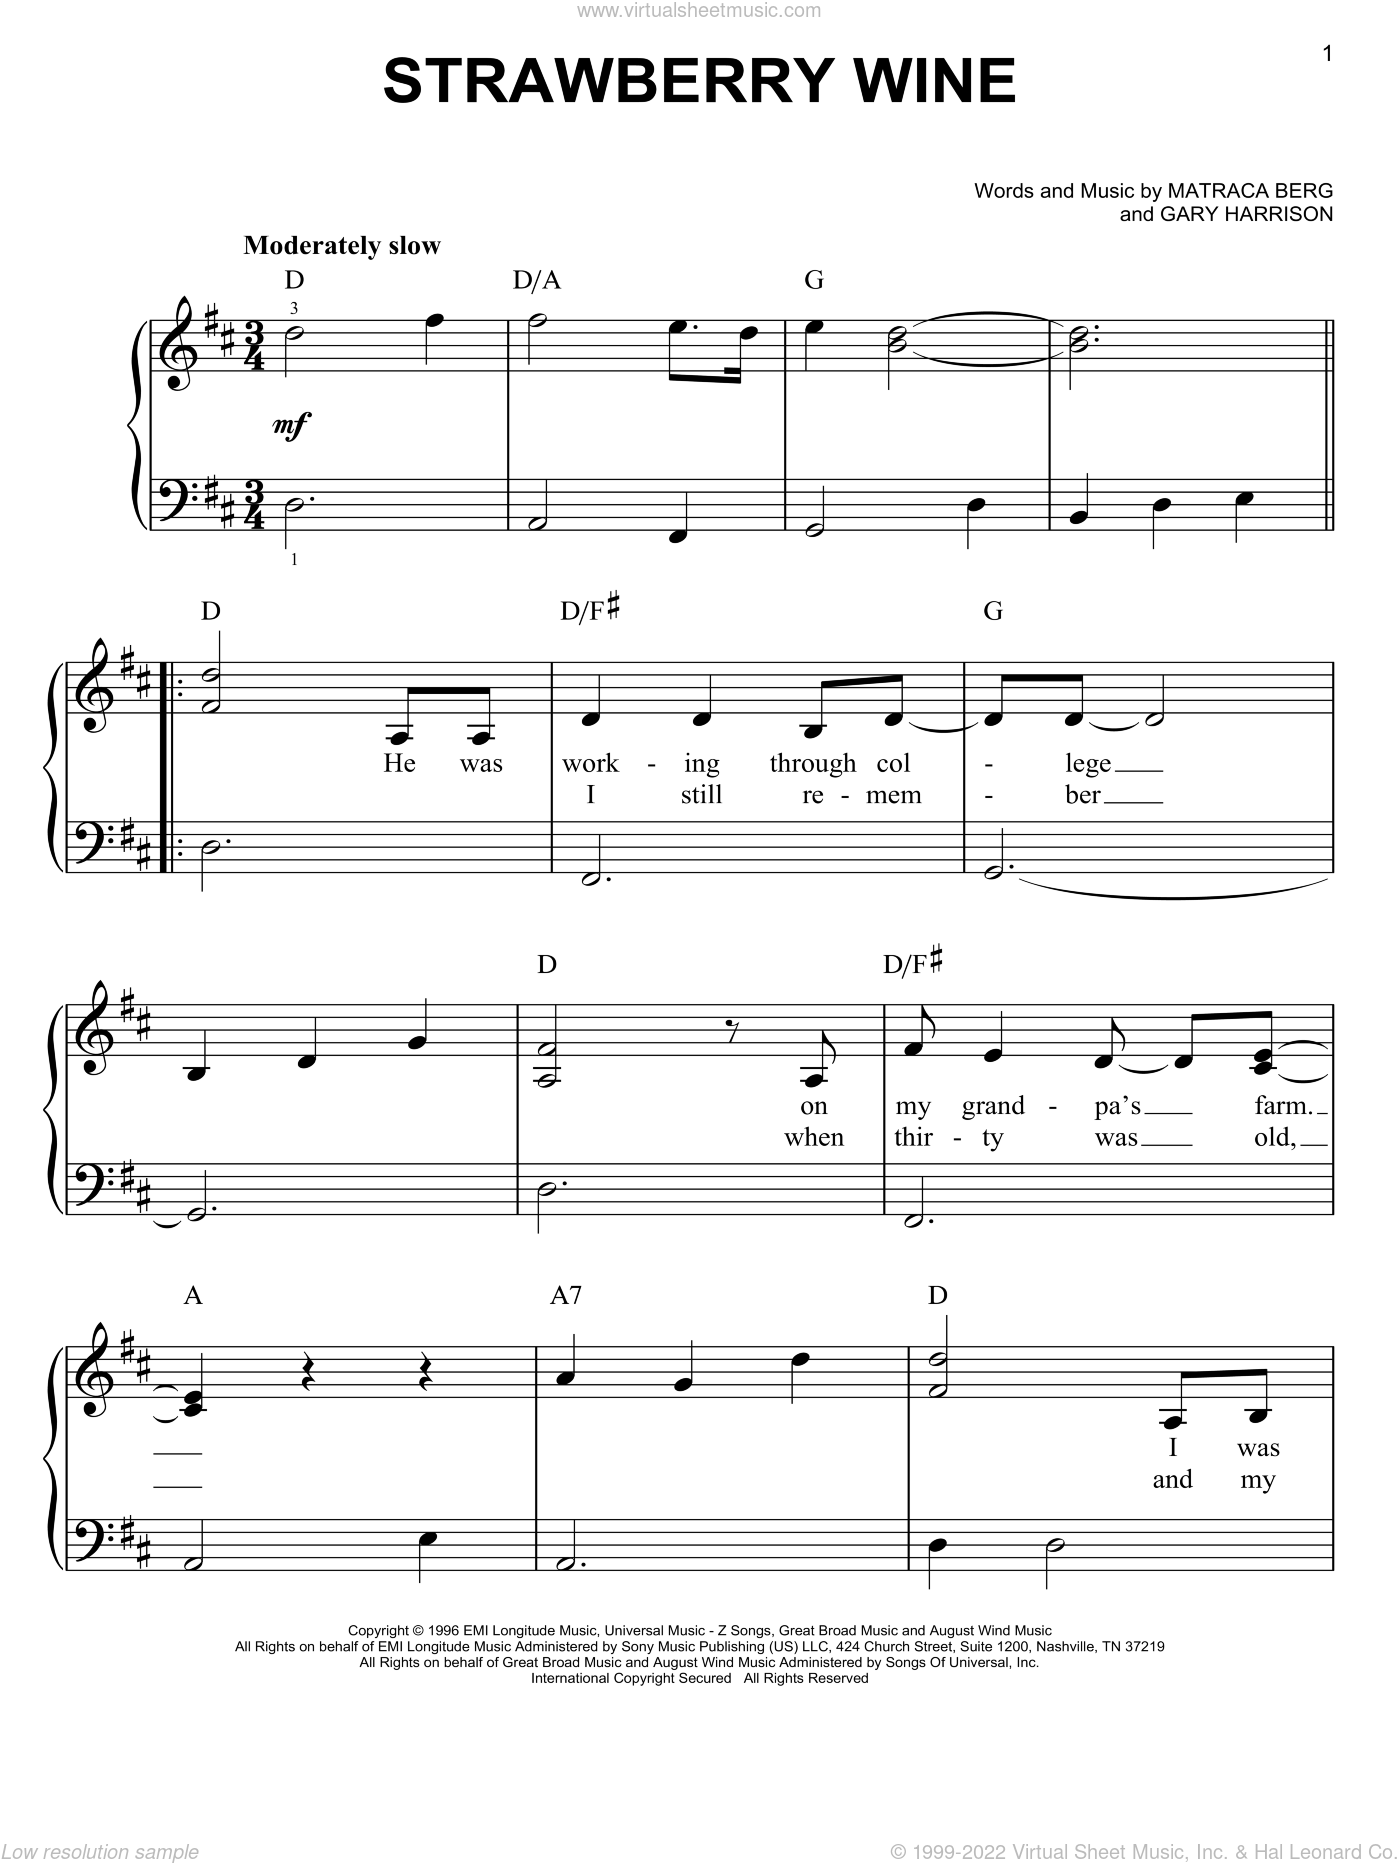 Carter - Strawberry Wine sheet music for piano solo (PDF) .